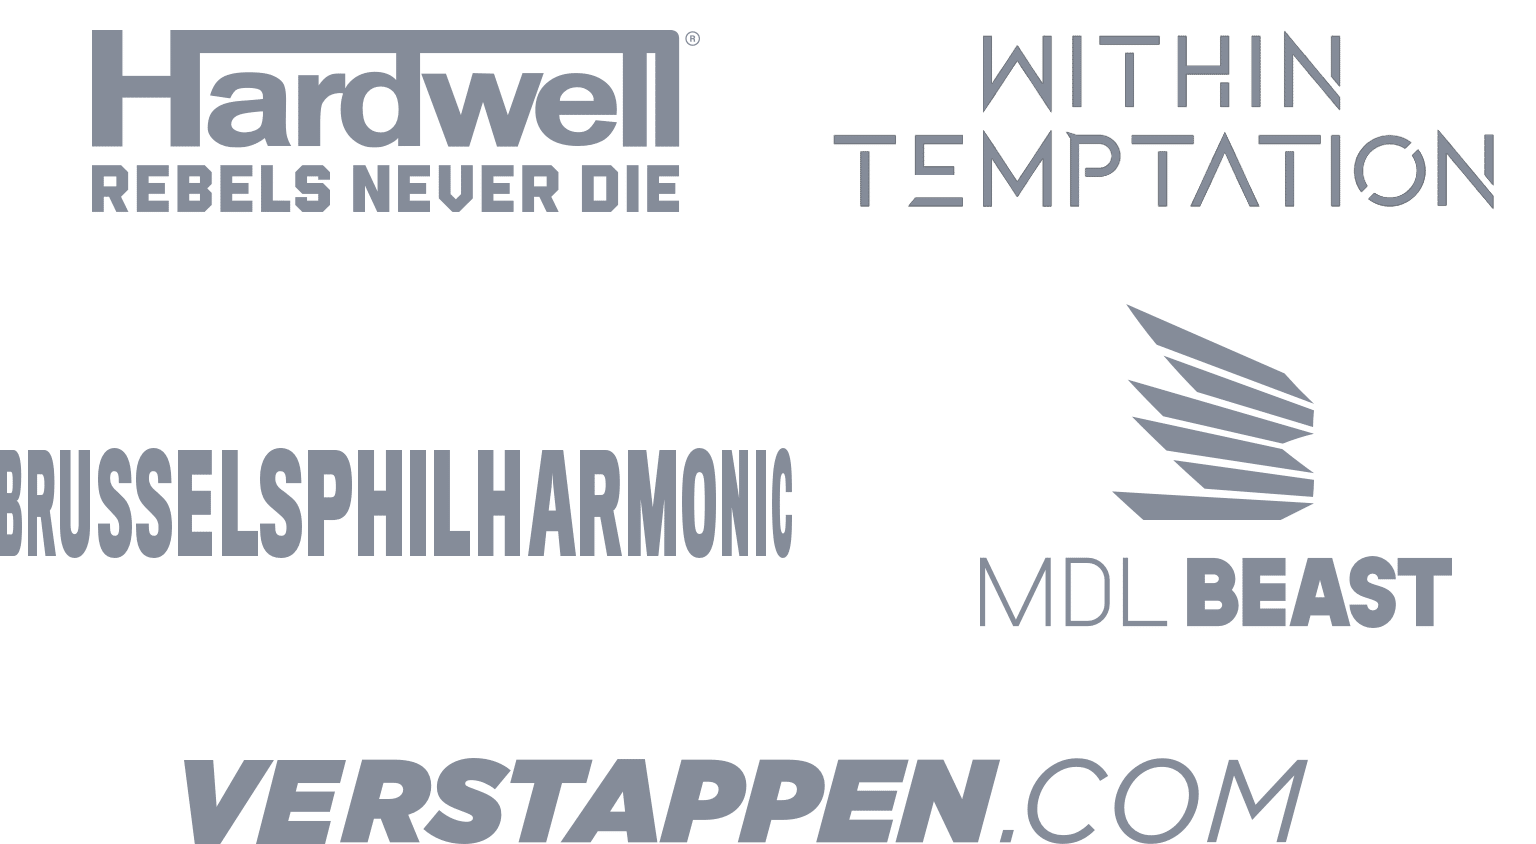 logo hardwell, within temptation, brussel philharmonic, mdl beast, verstappen.com